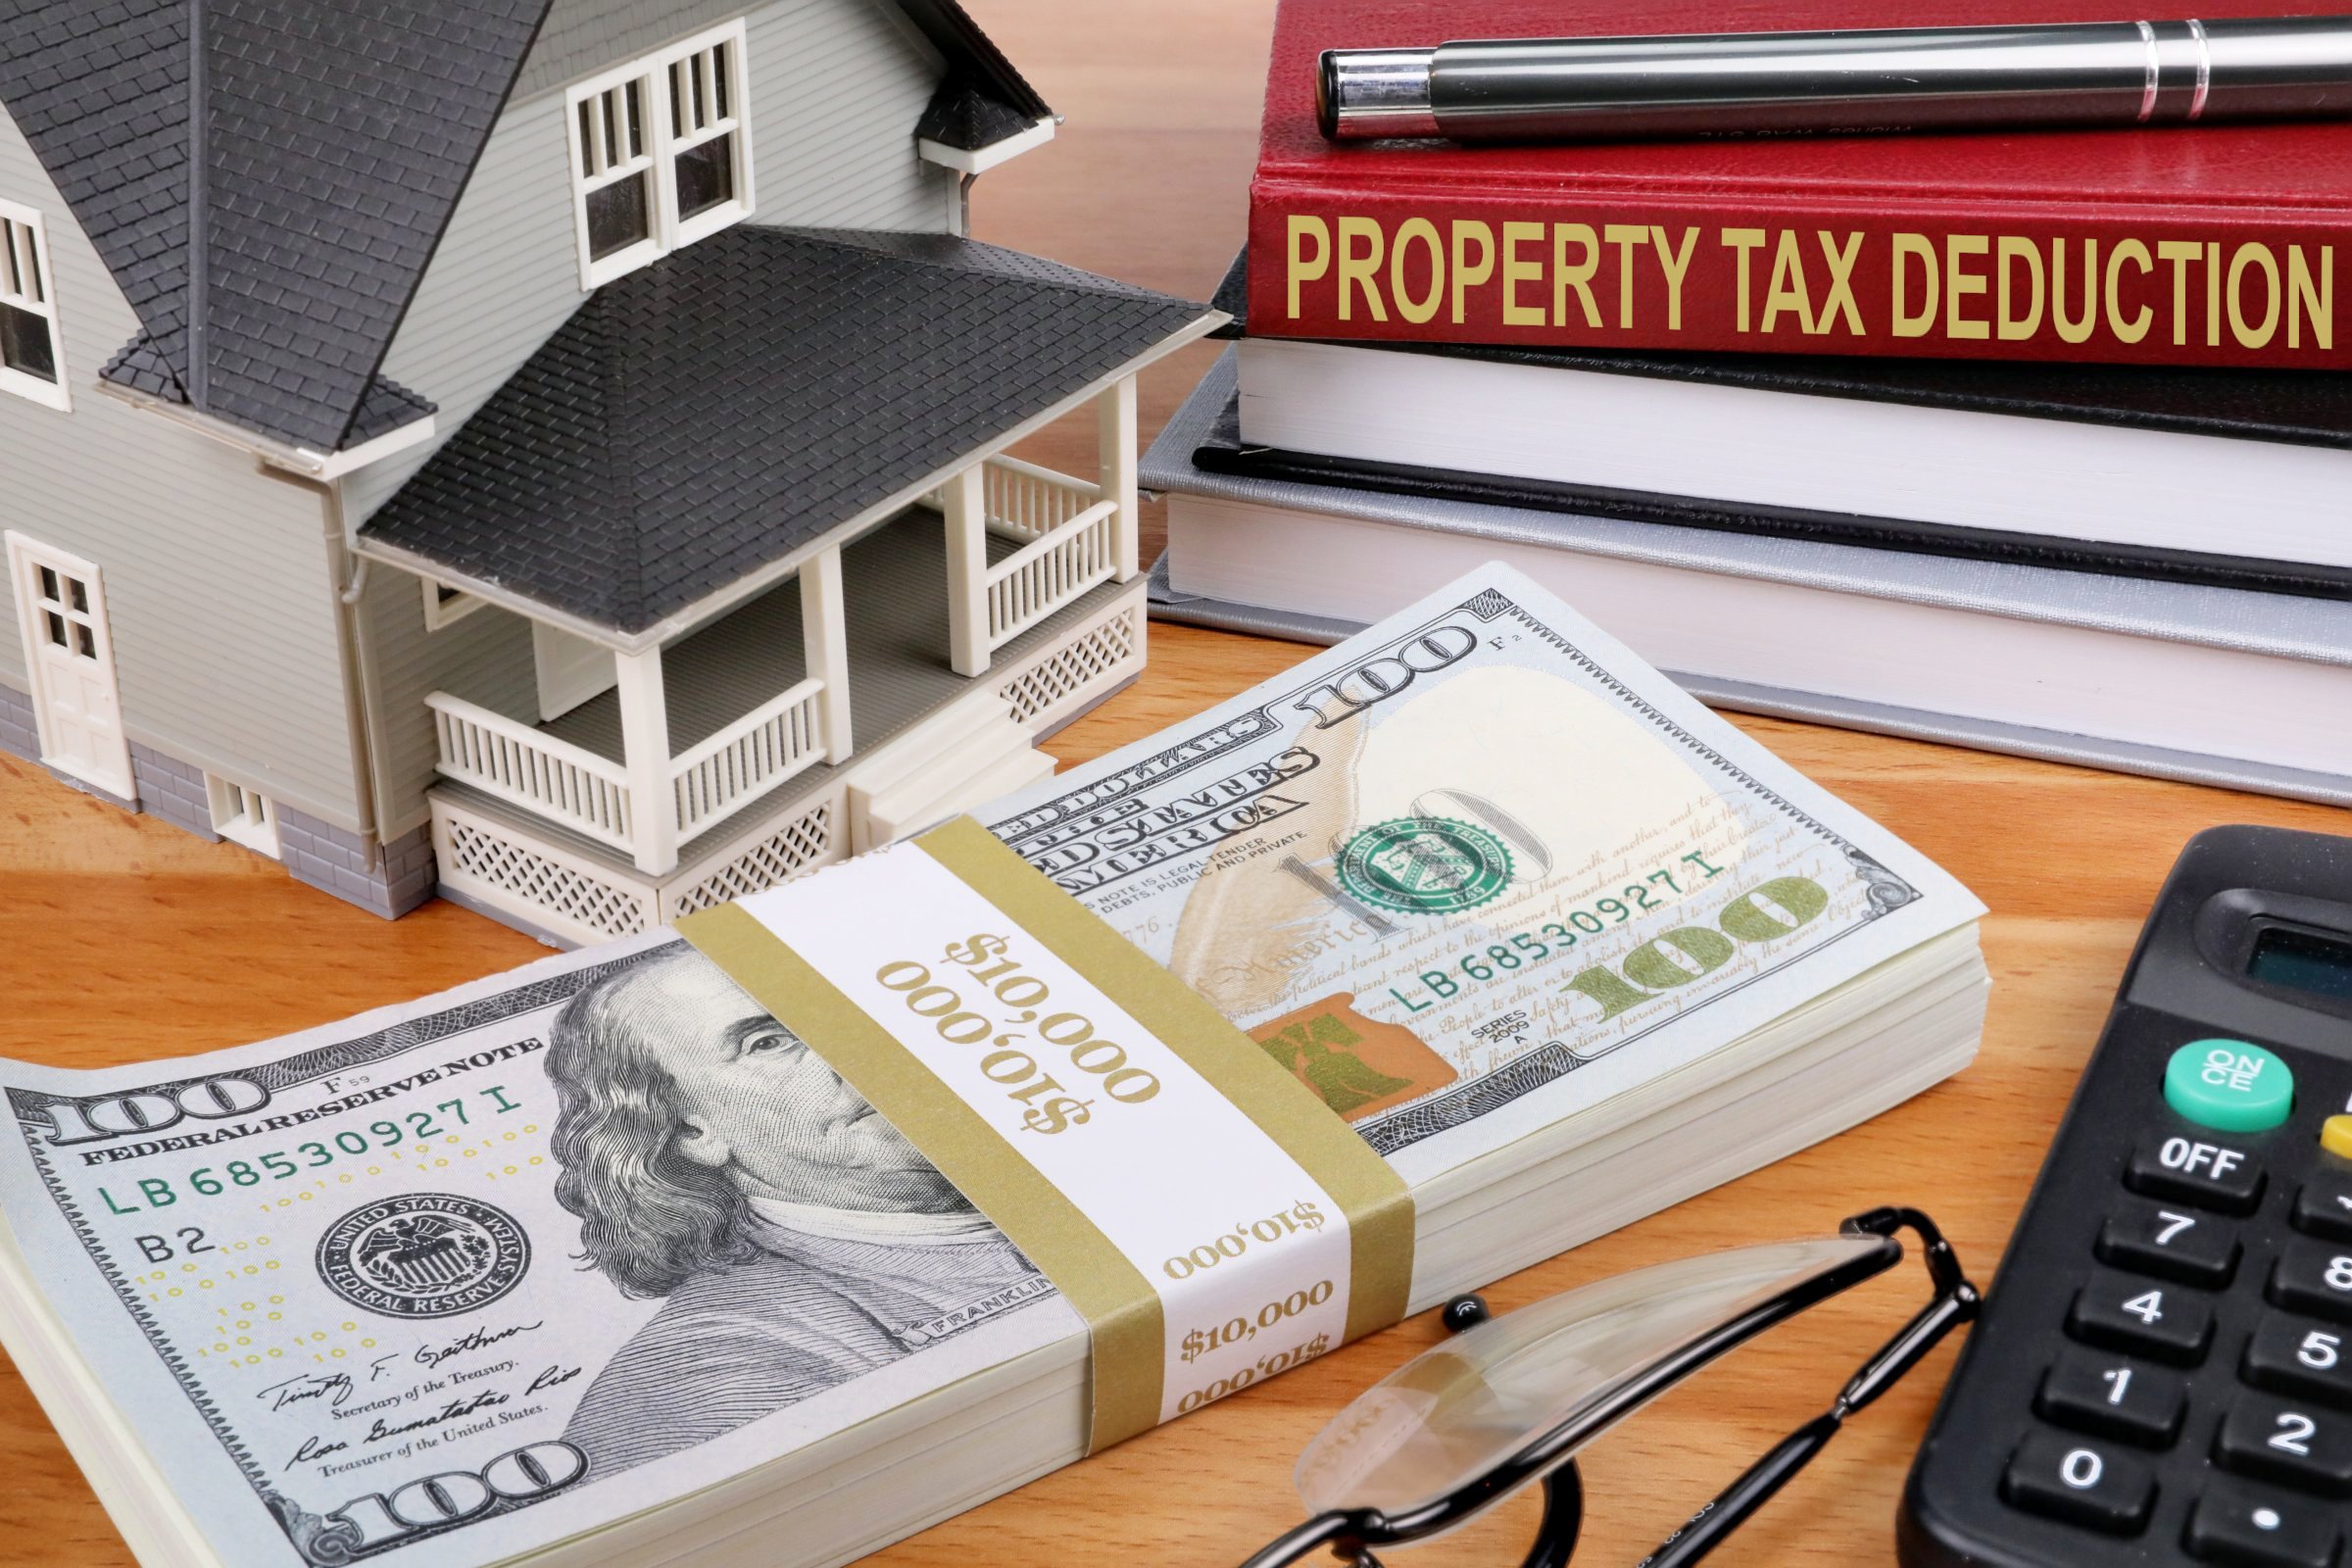 Ny Real Estate Tax Deduction